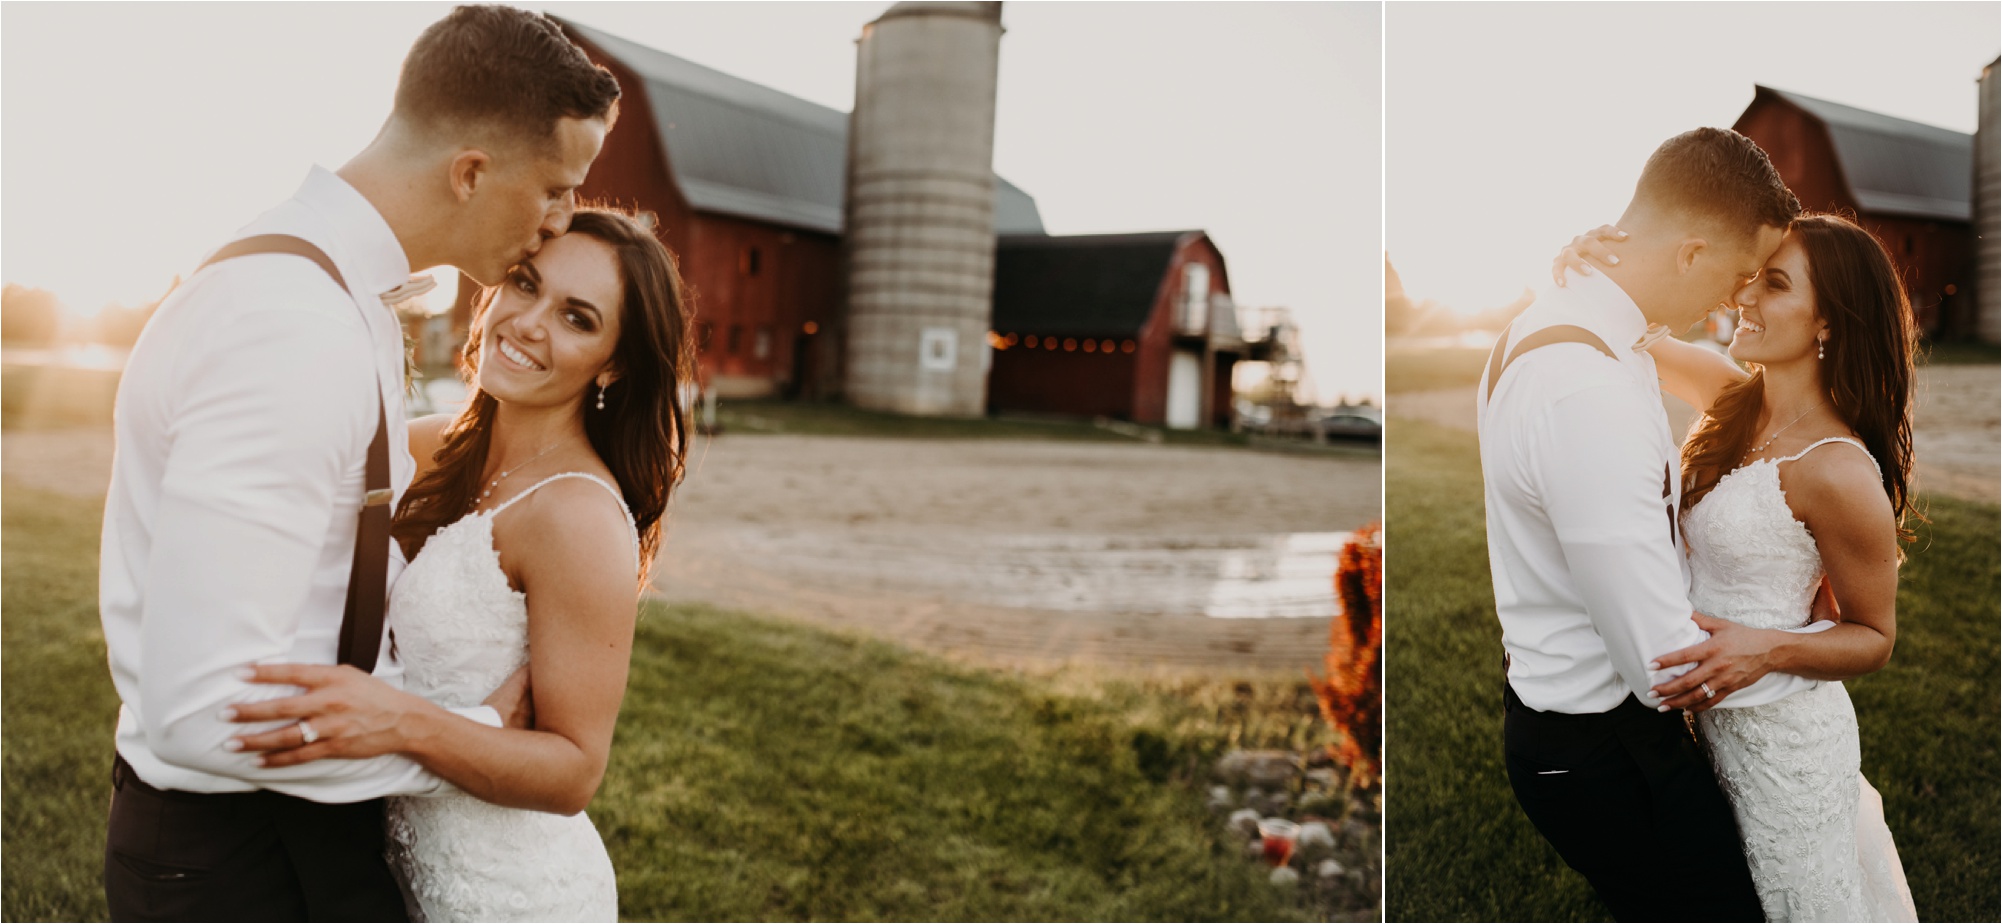  bride and groom sunset photos wisconsin wedding photographer  